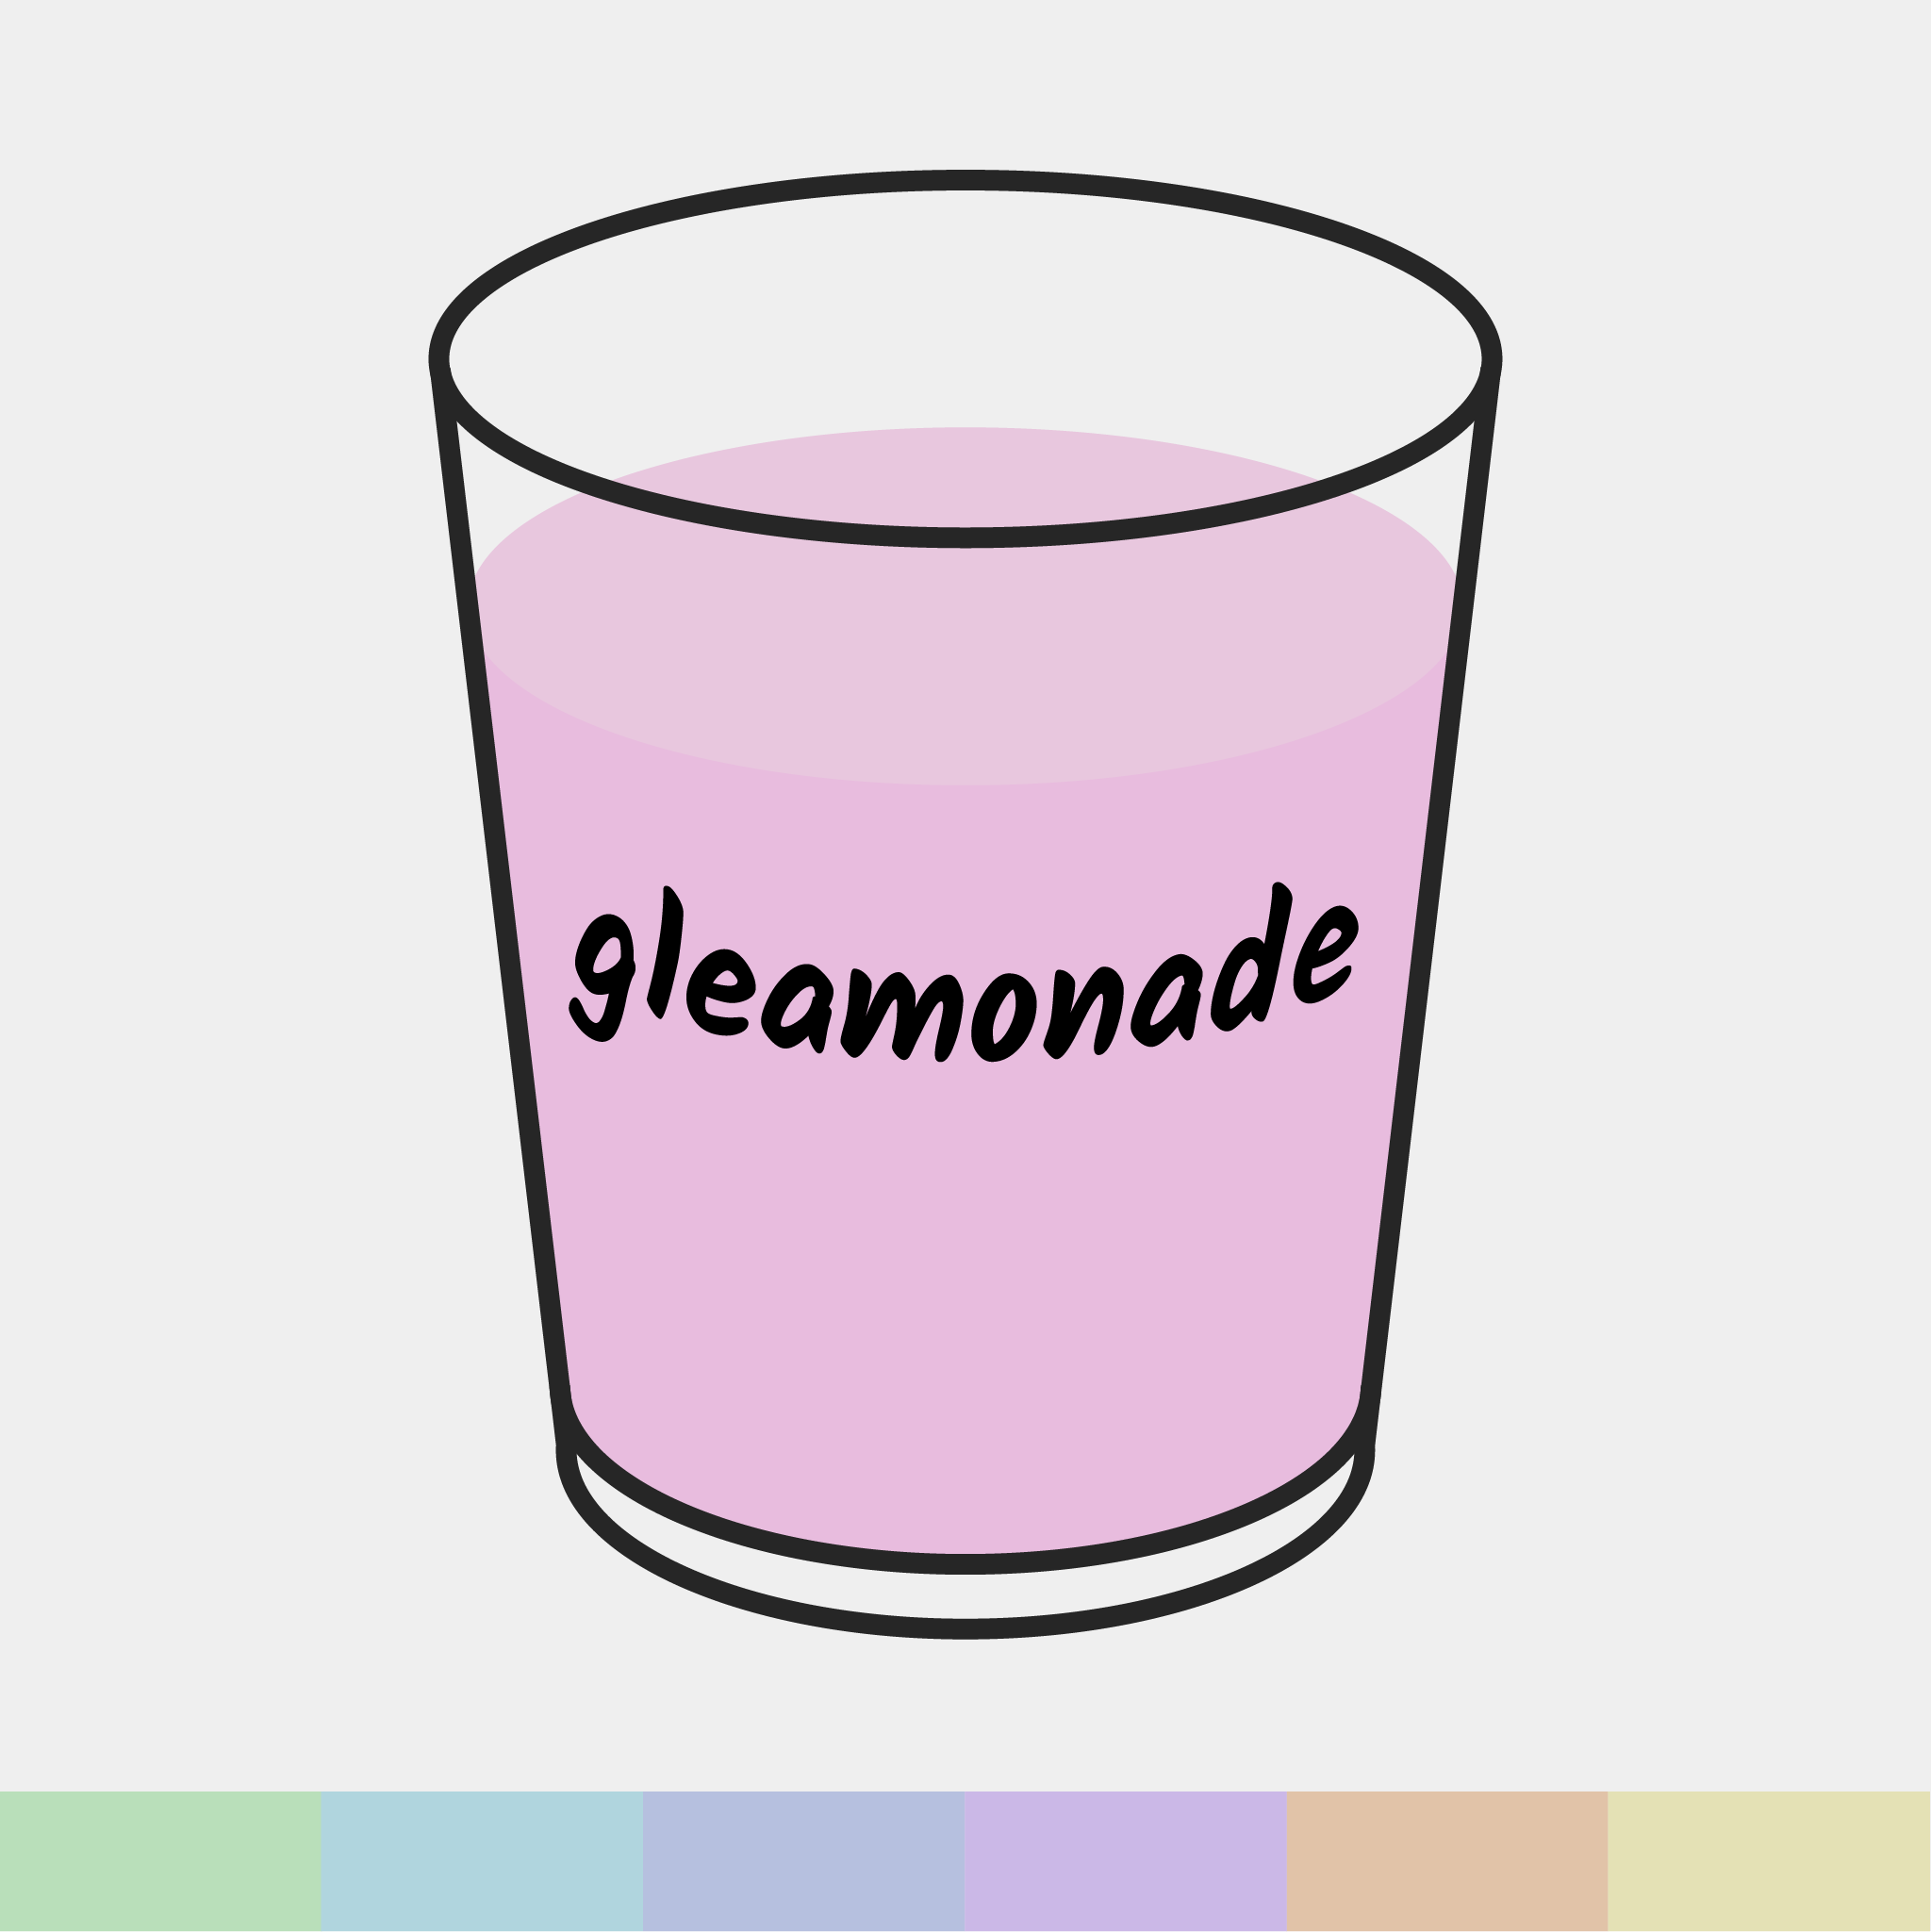 gleamonade